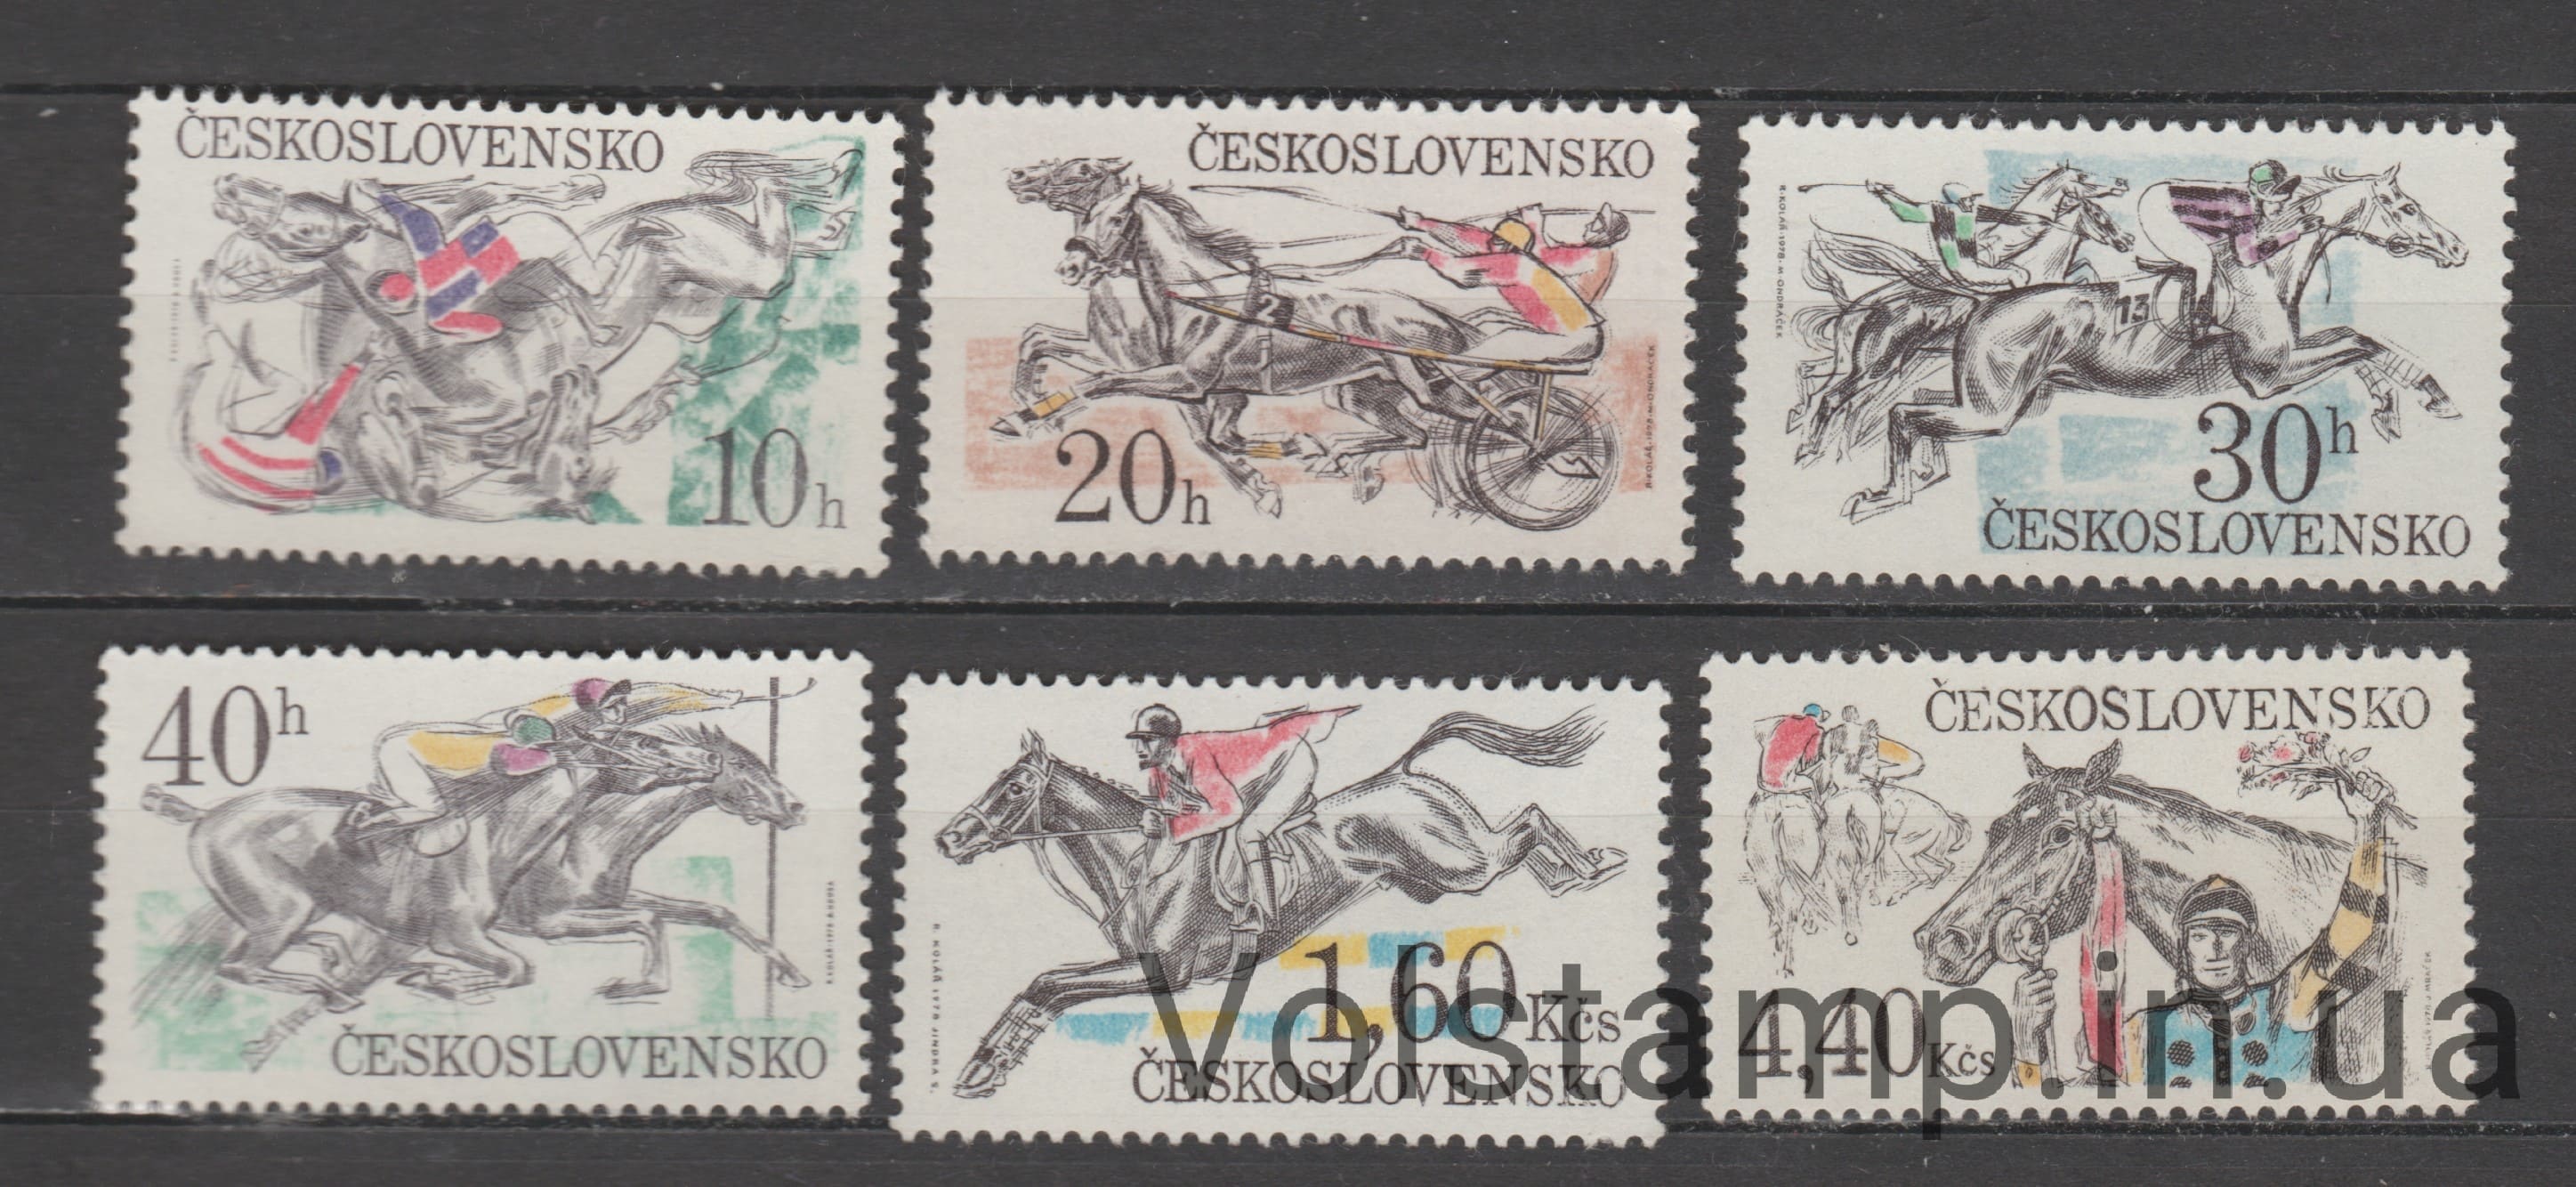 1978 Чехословакия серия марок (Фауна, кони) MNH №2469-2474